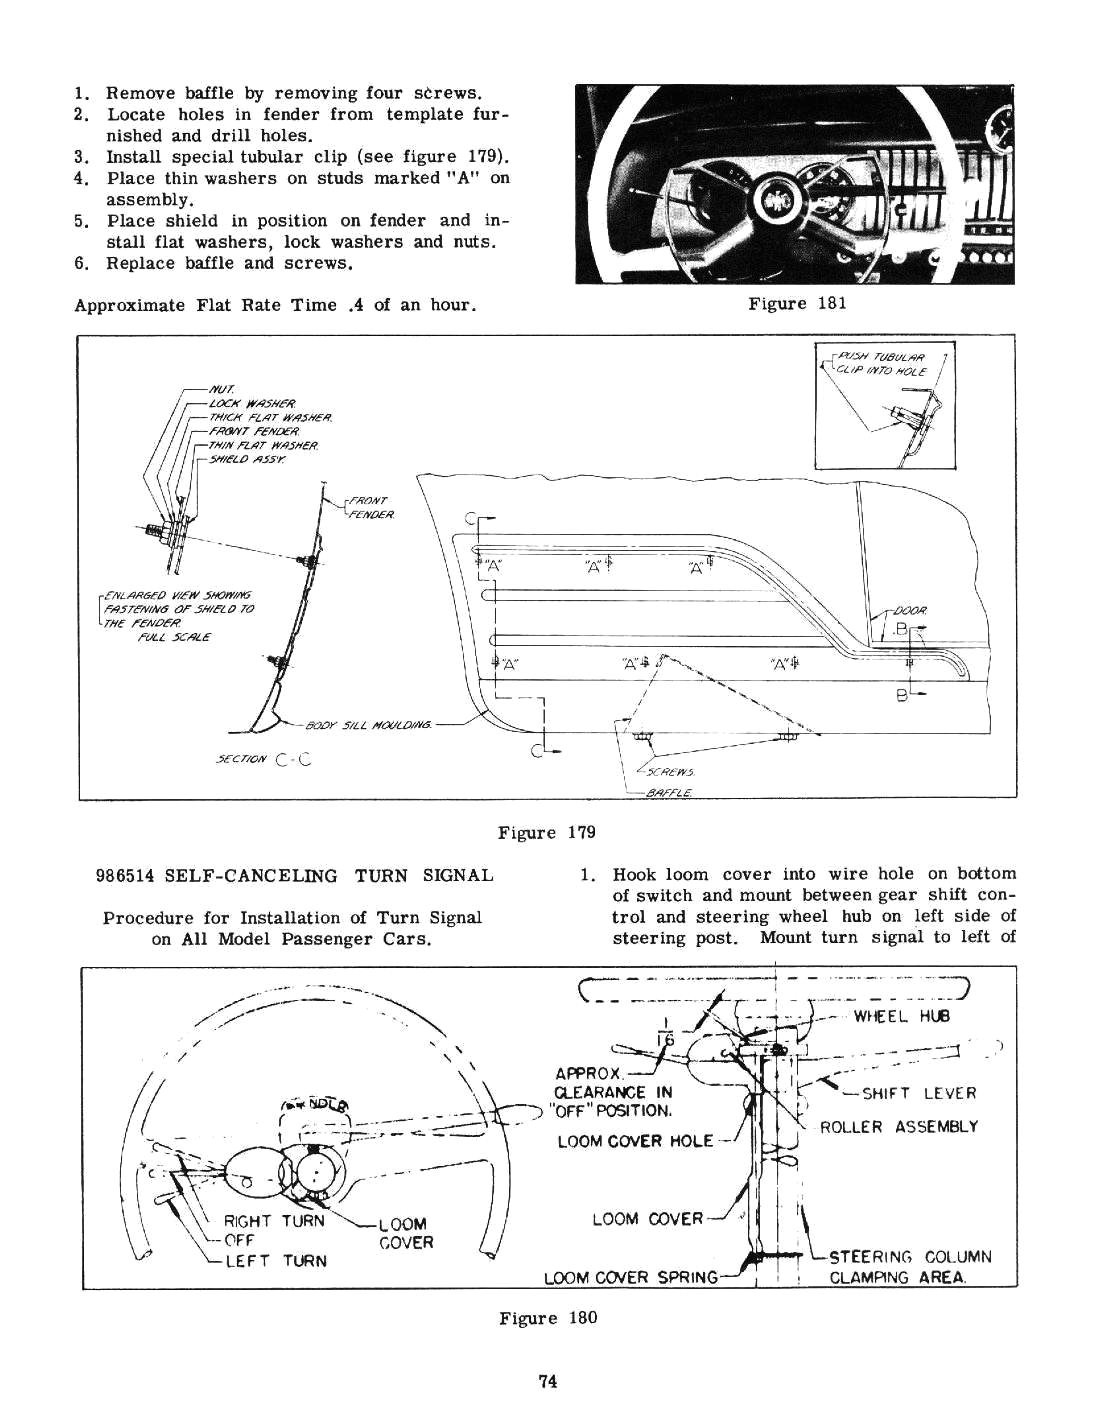 1951_Chevrolet_Acc_Manual-74